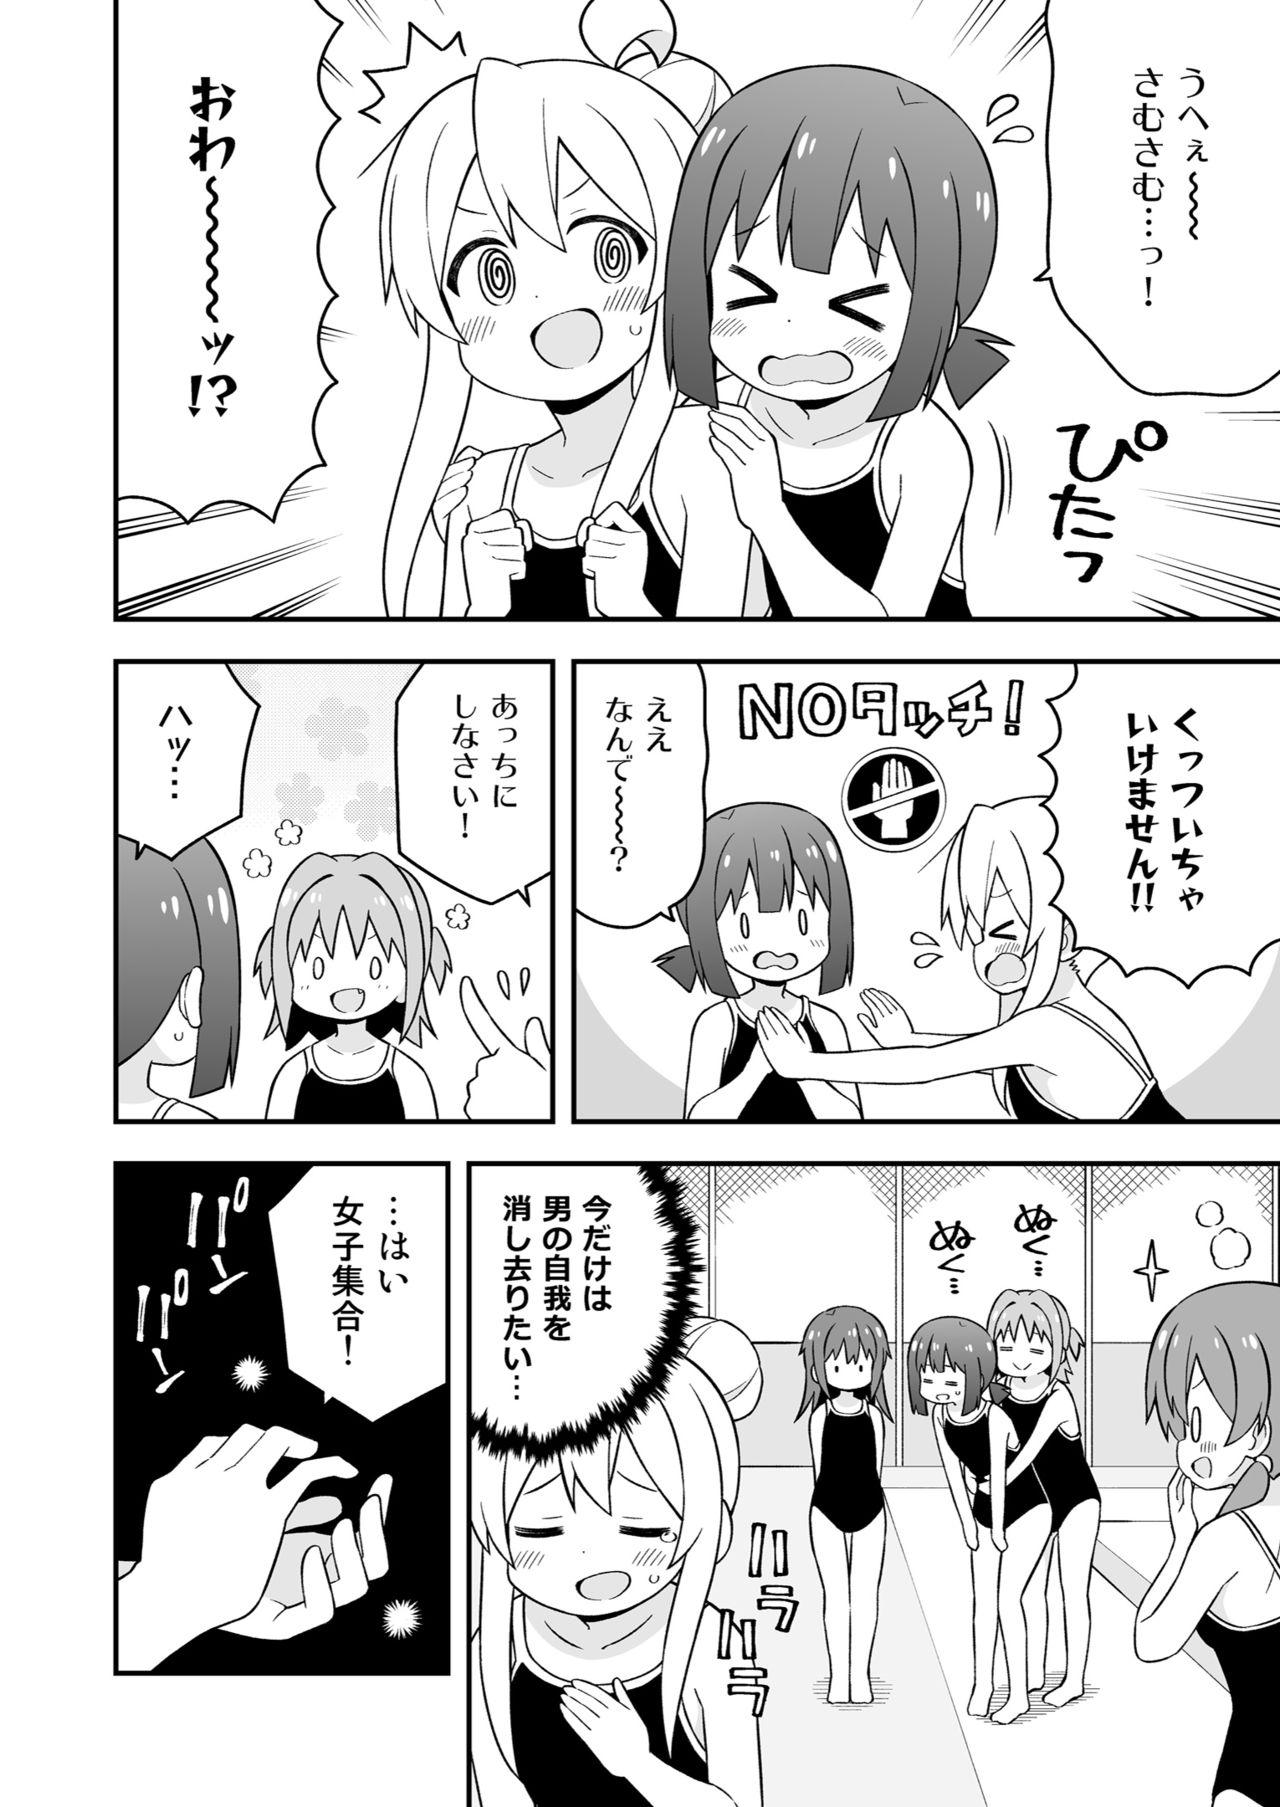 Mommy Onii-chan wa Oshimai! 17 Flagra - Page 6